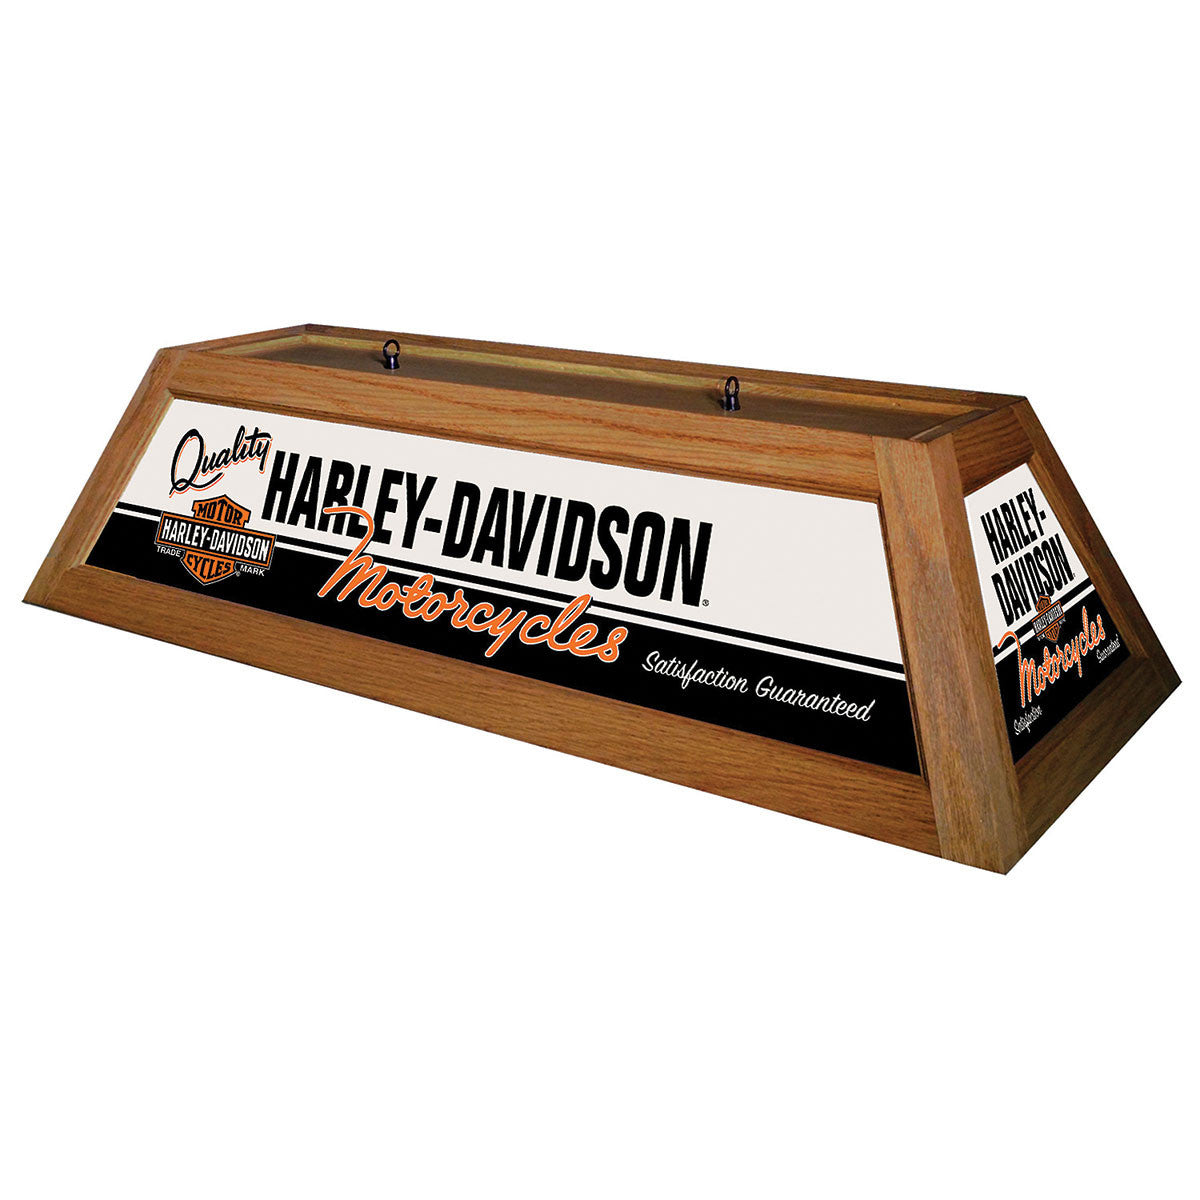 Harley Davidson H-D Quality Motorcycles Billiard Light